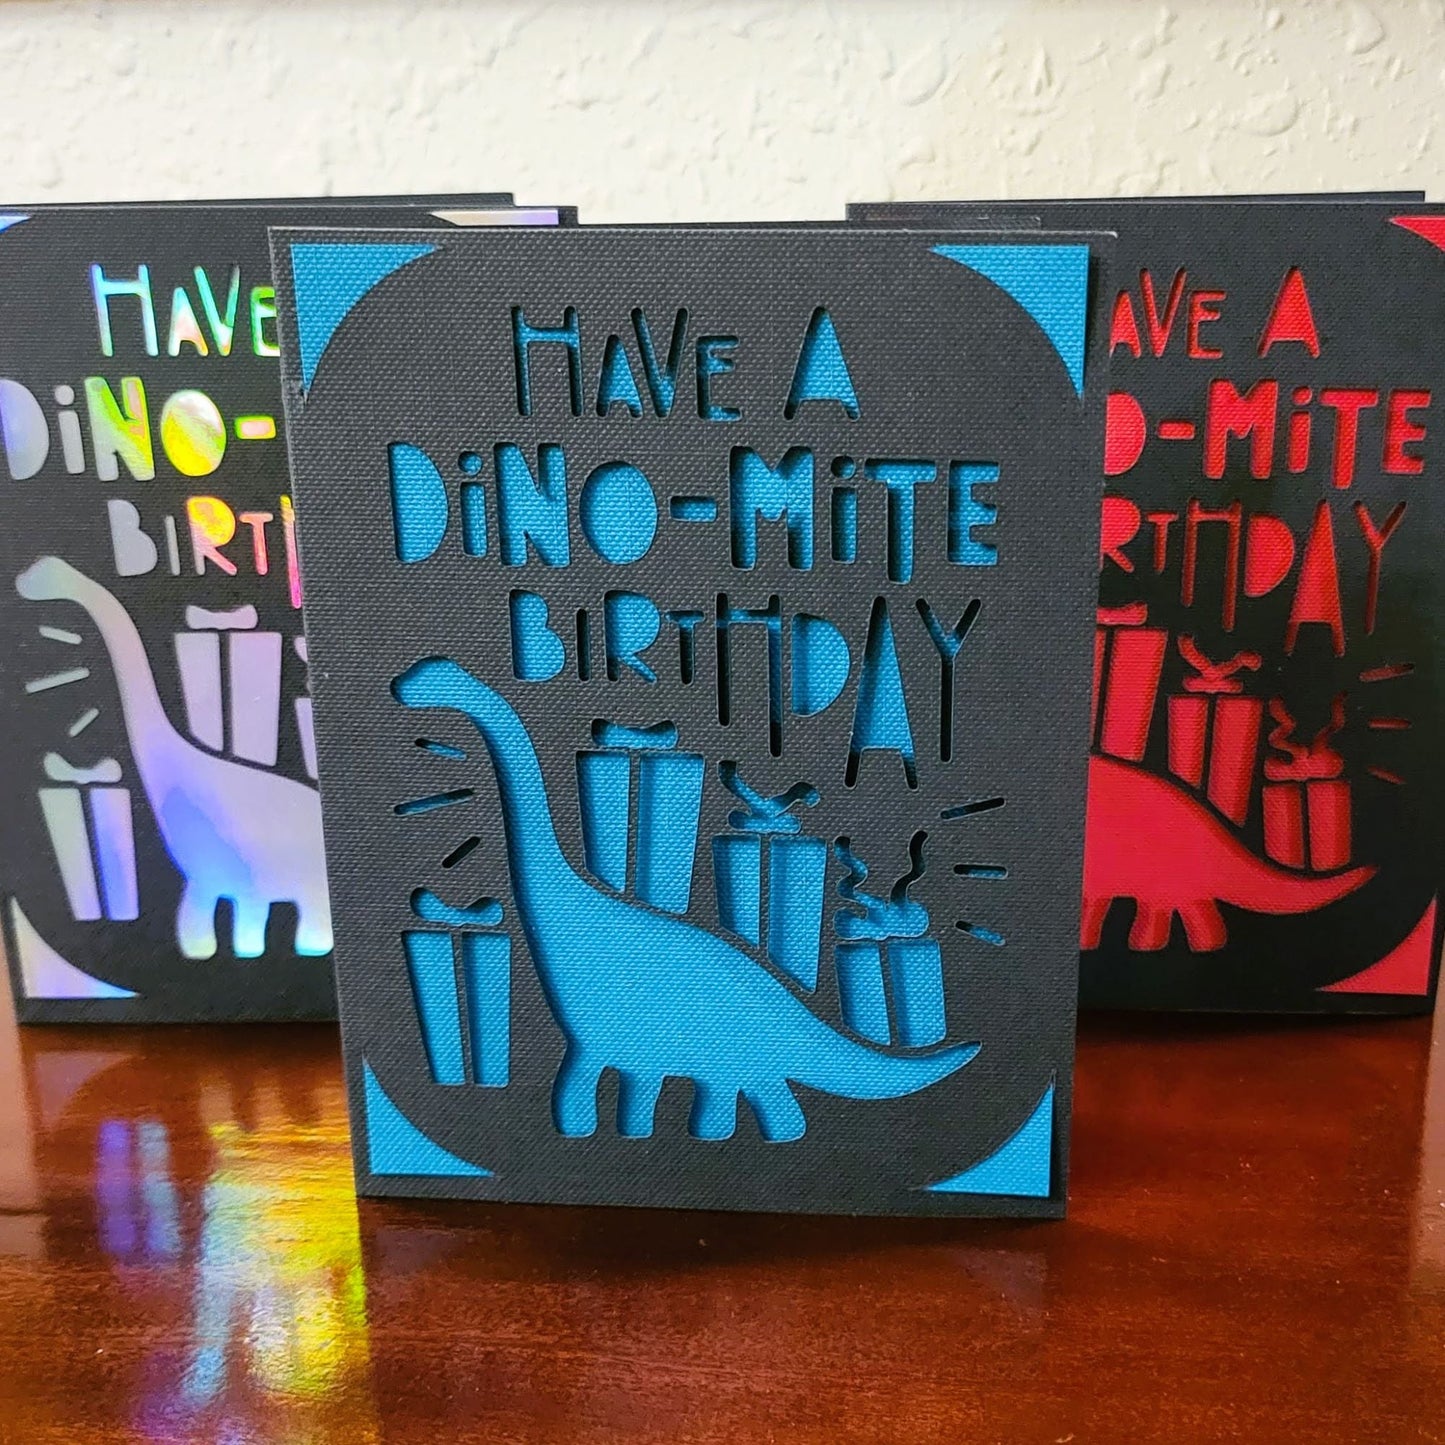 Dino-mite! - Happy Birthday Collection - Handmade Greeting Card - 31 Rubies Designs